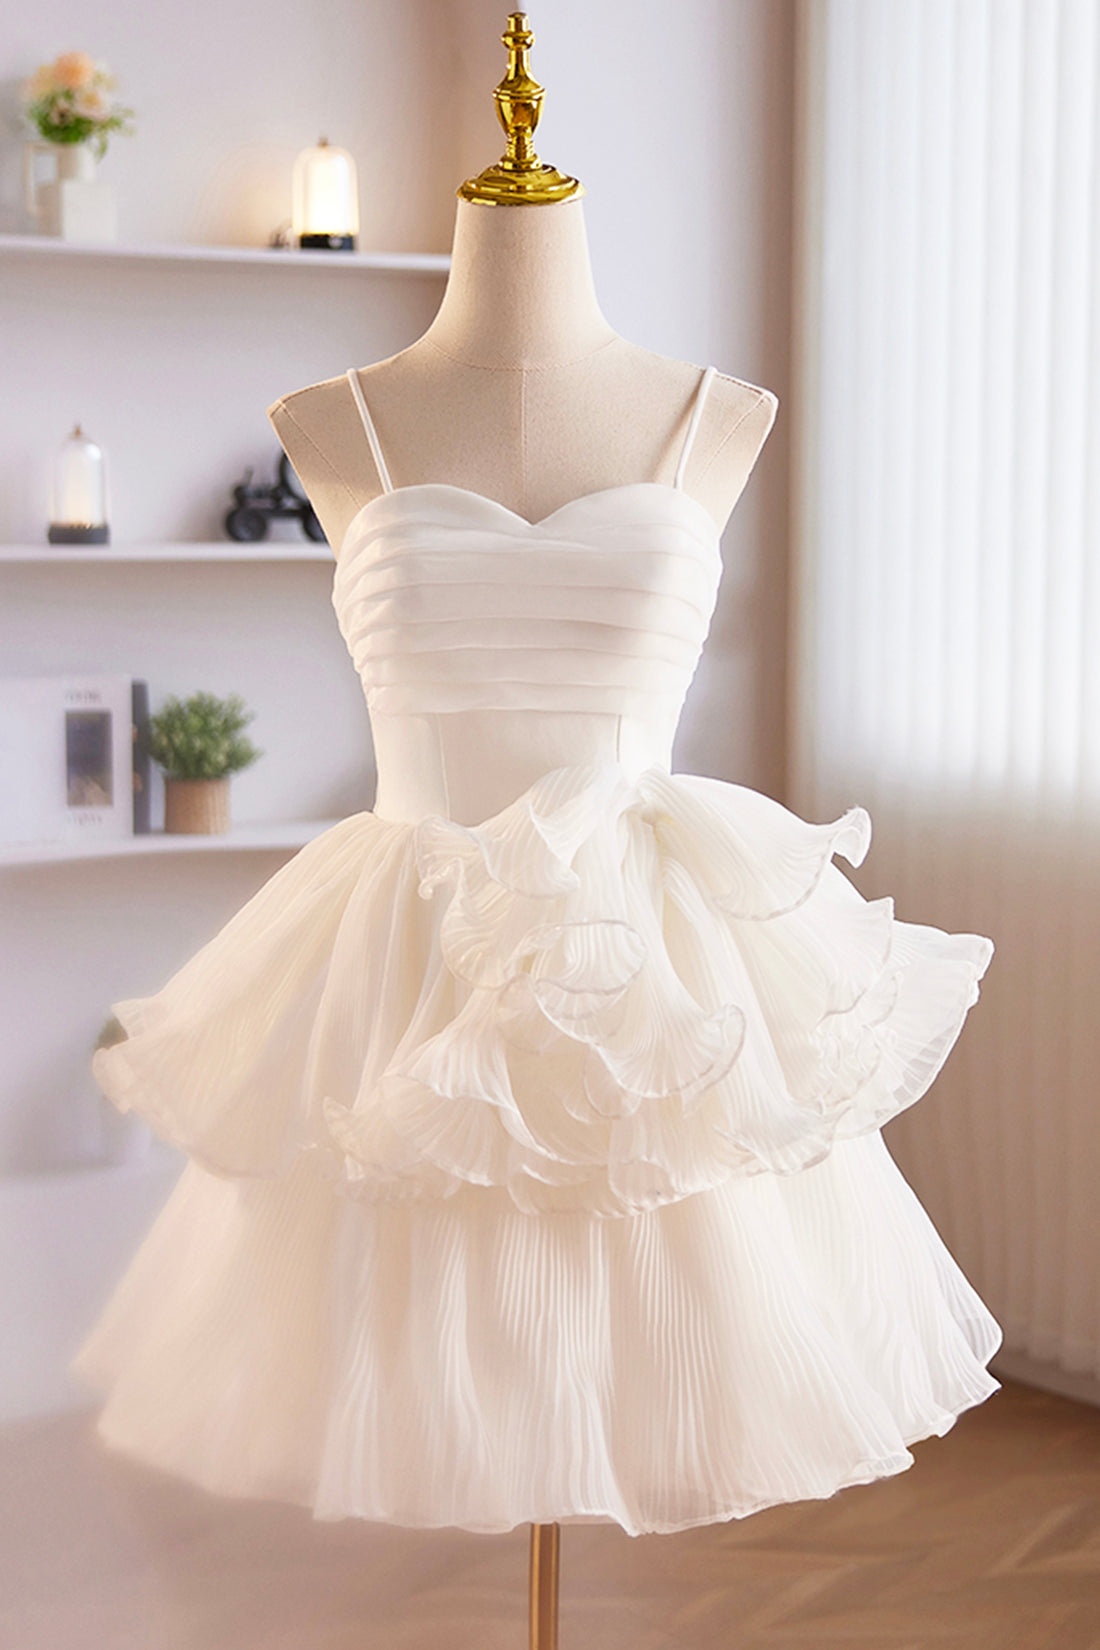 Prom Dress For Kids, White Spaghetti Strap Tulle Short Prom Dress, White A-Line Homecoming Dress